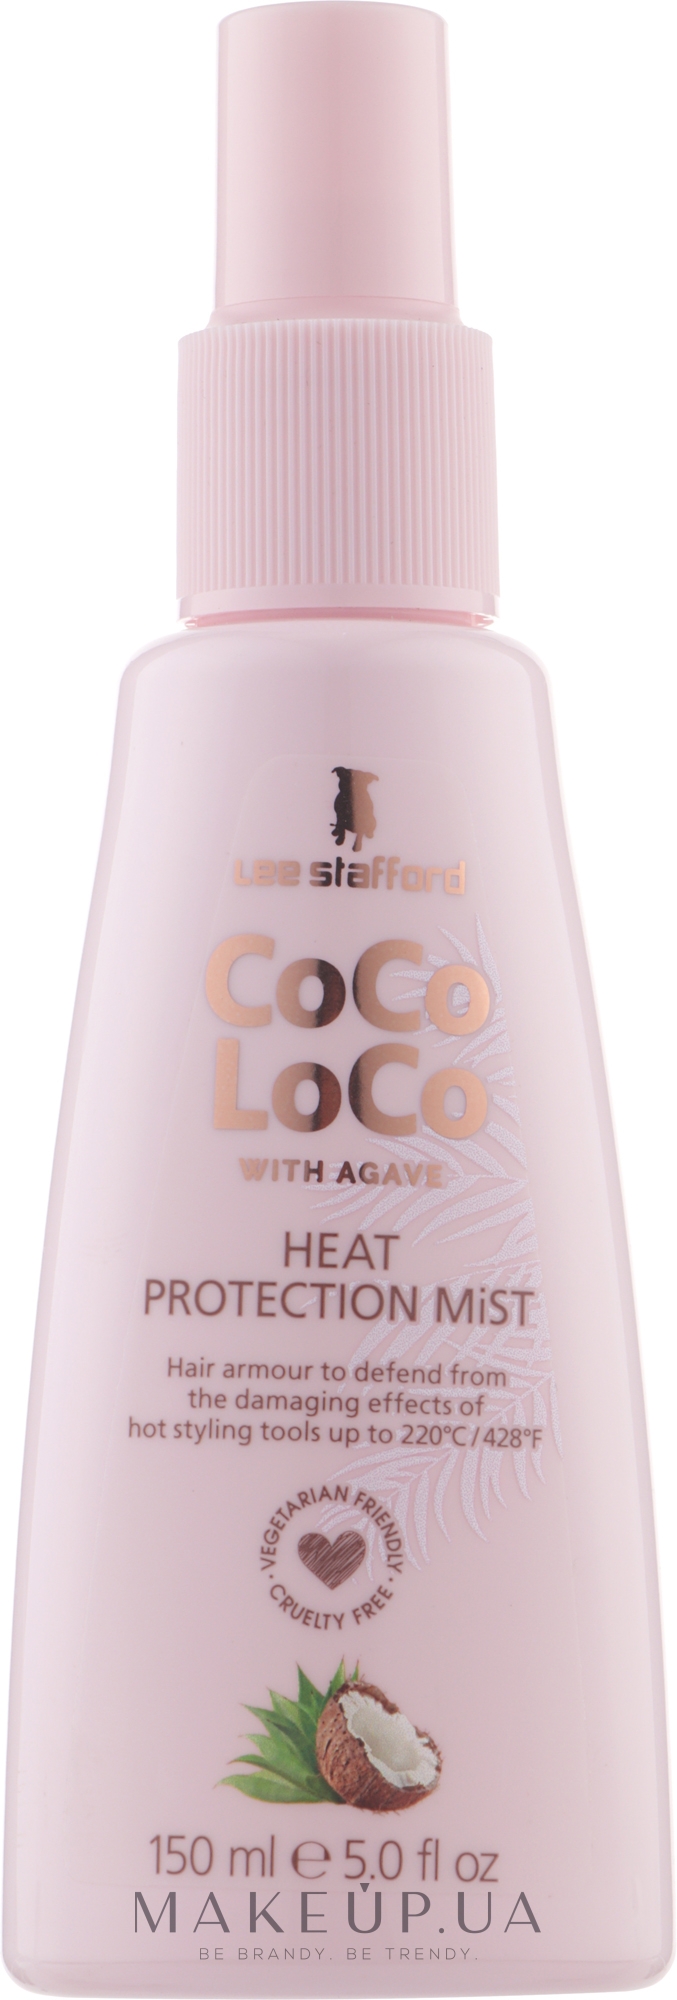 Захисний спрей для волосся - Lee Stafford Coco Loco With Agave Heat Protection Mist — фото 150ml